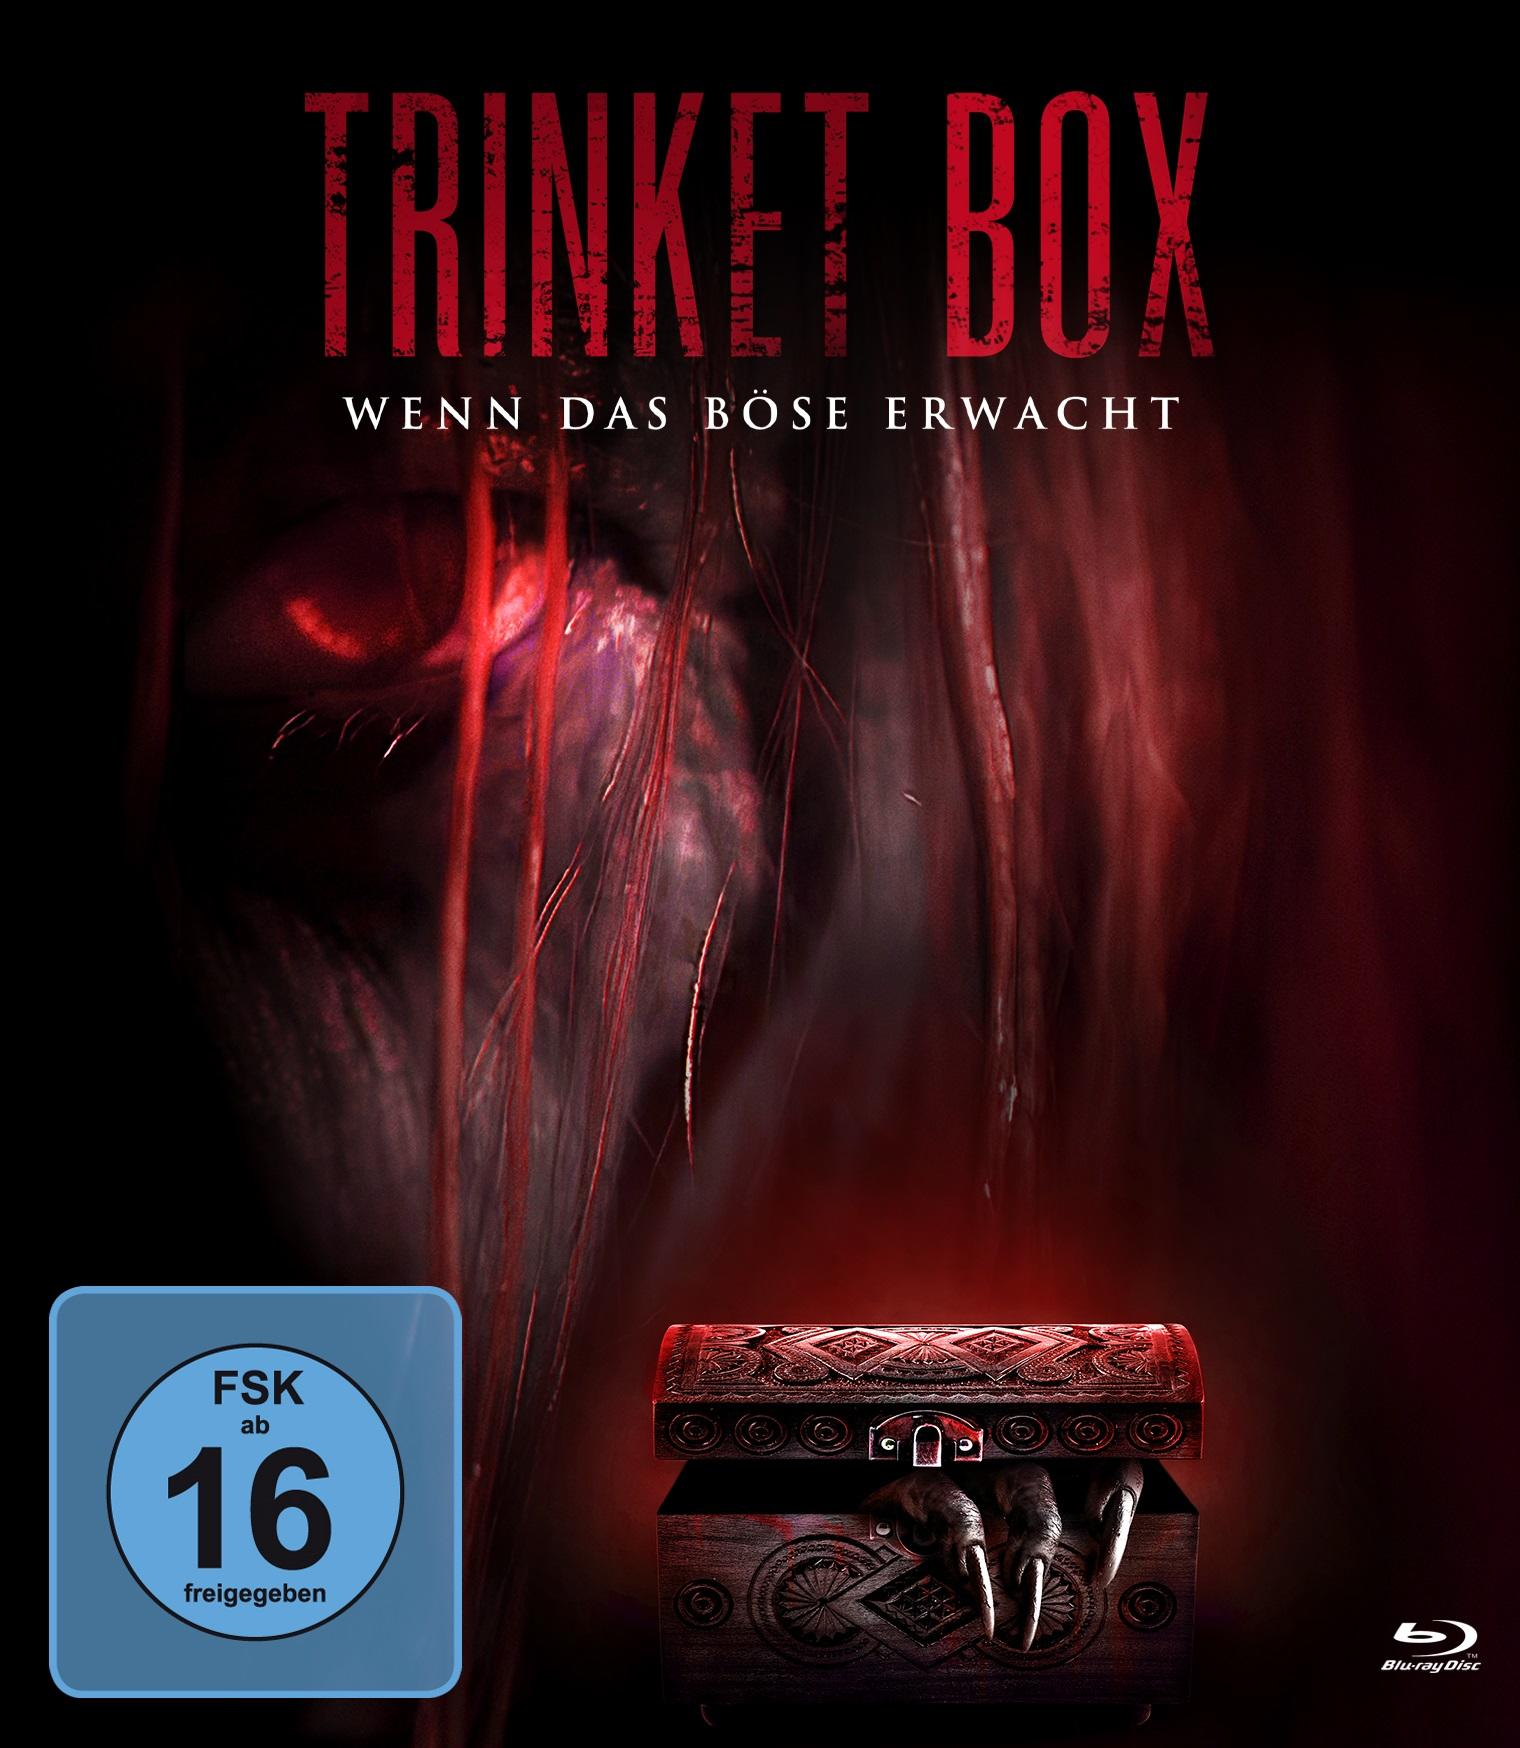 Box Wenn Trinket Das Blu-ray Erwacht Boese -